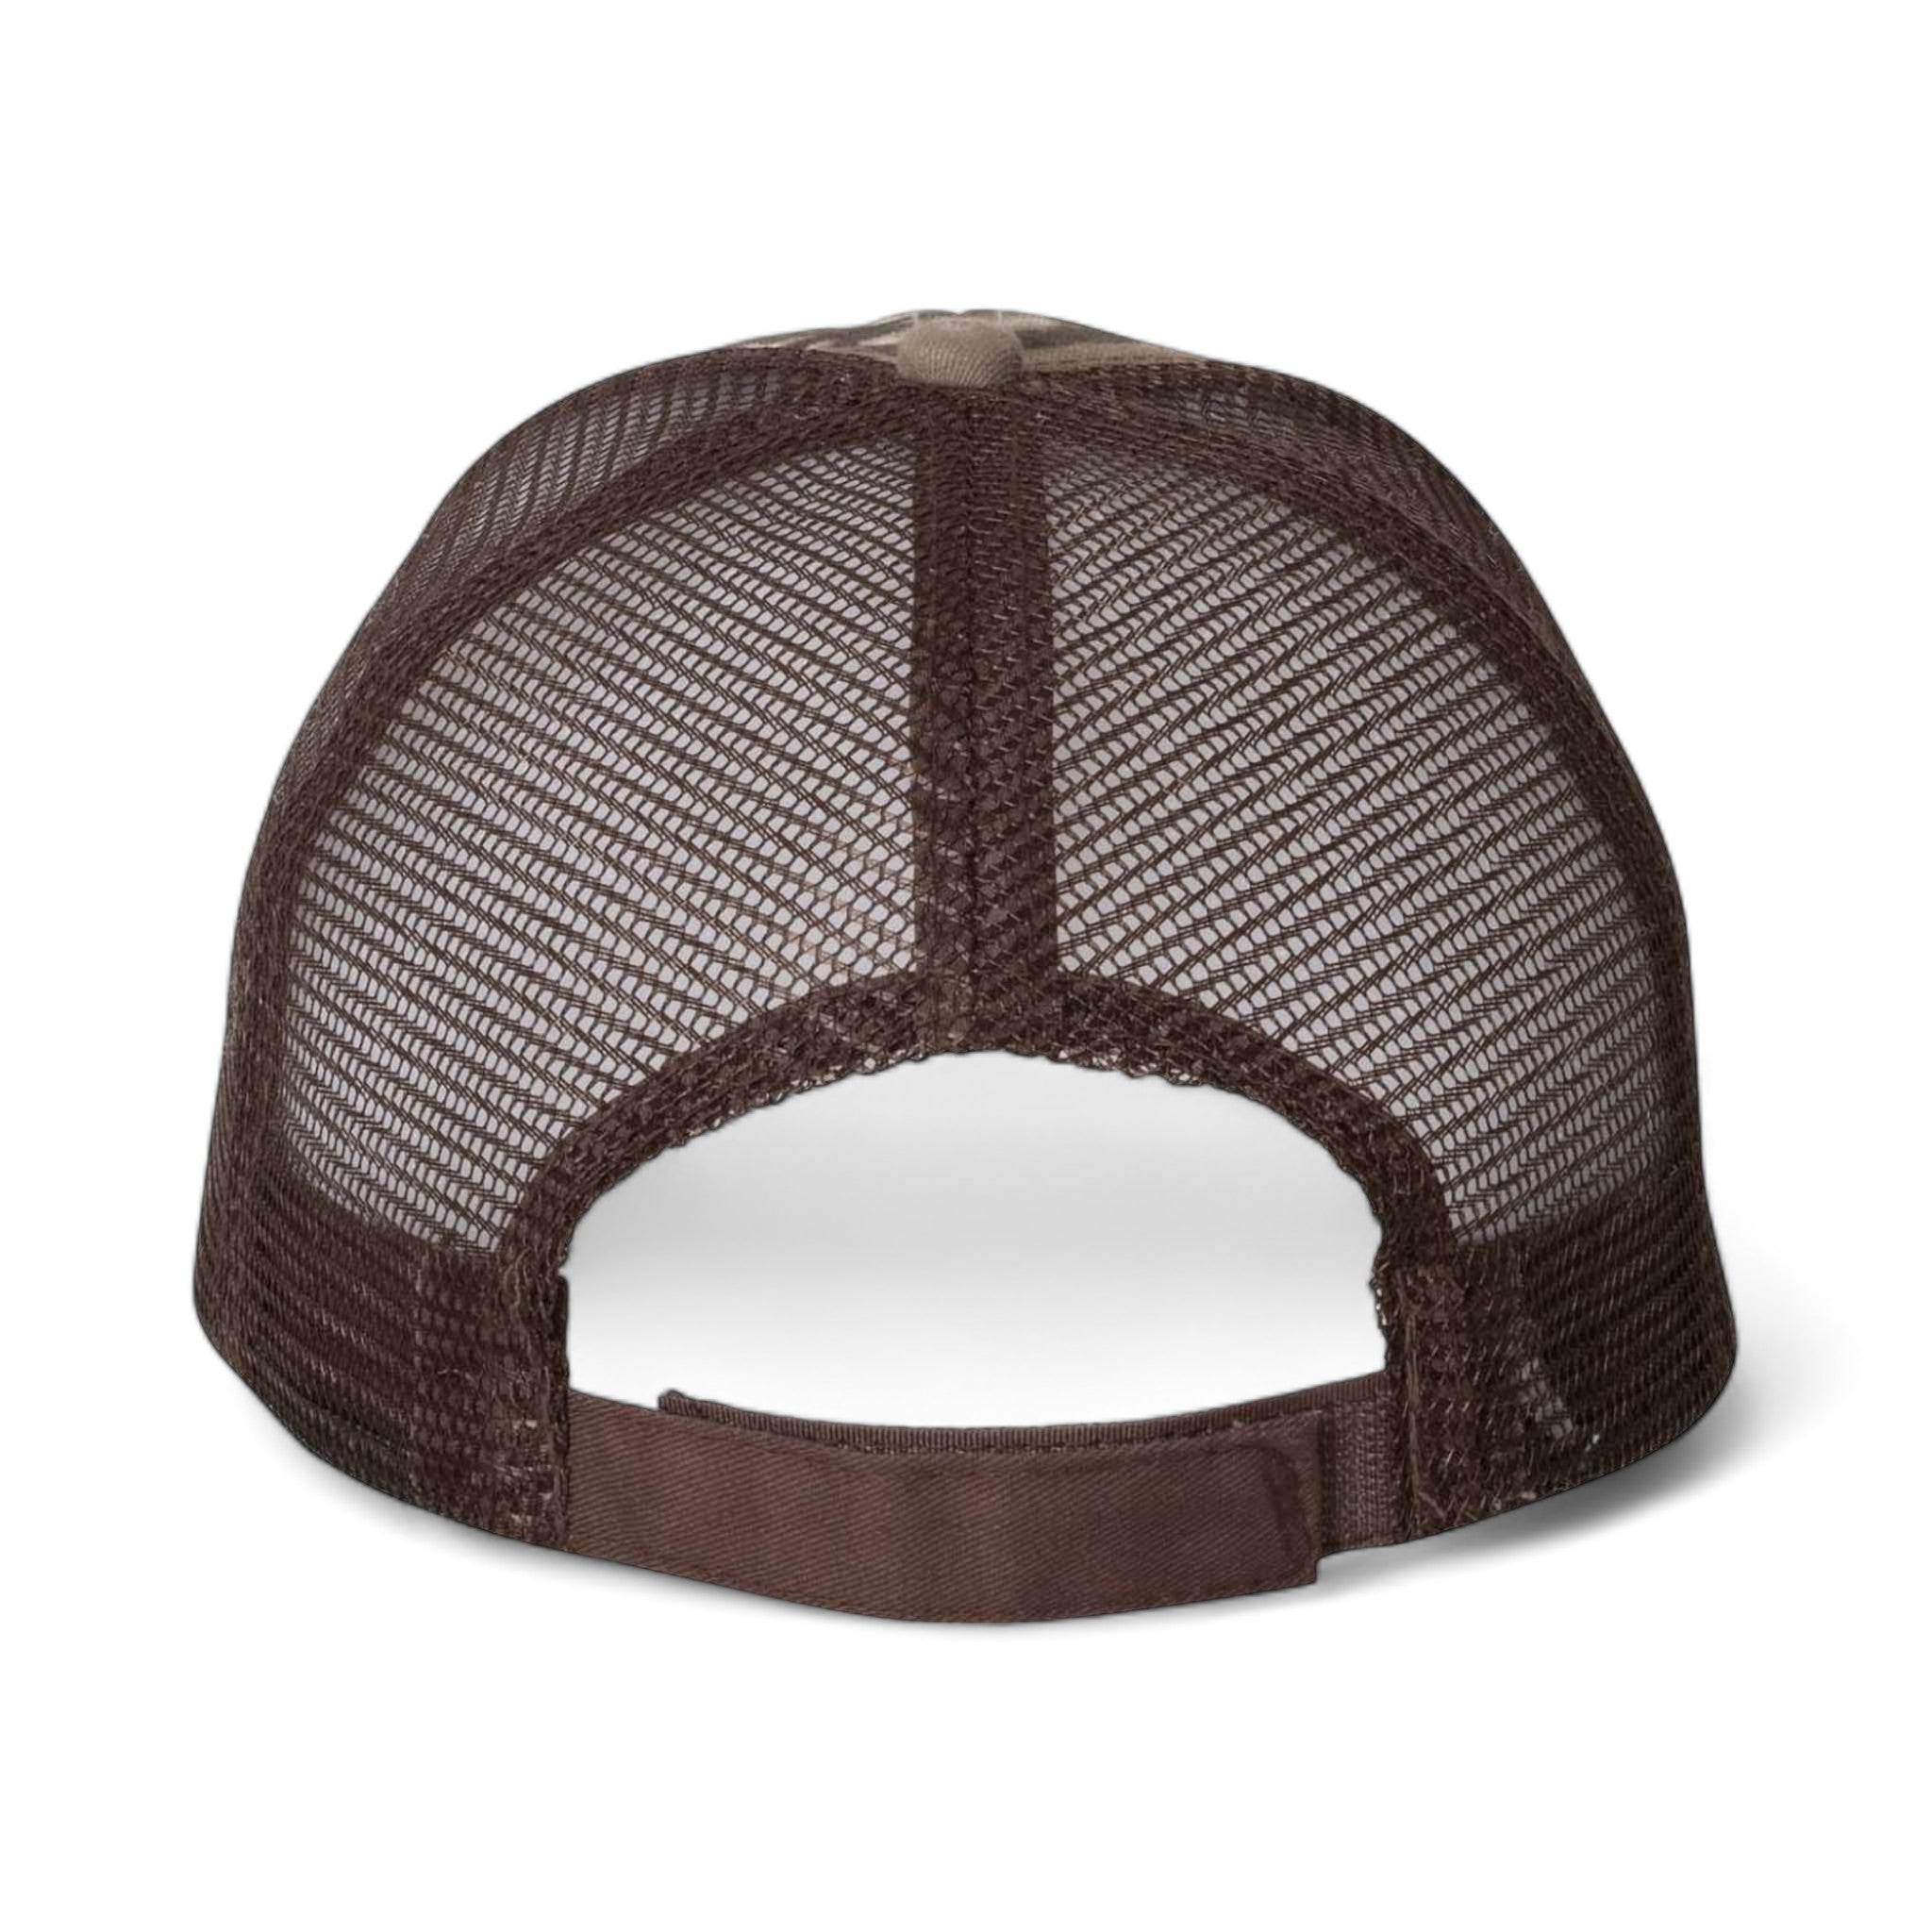 Back view of Kati LC5M custom hat in realtree ap and brown